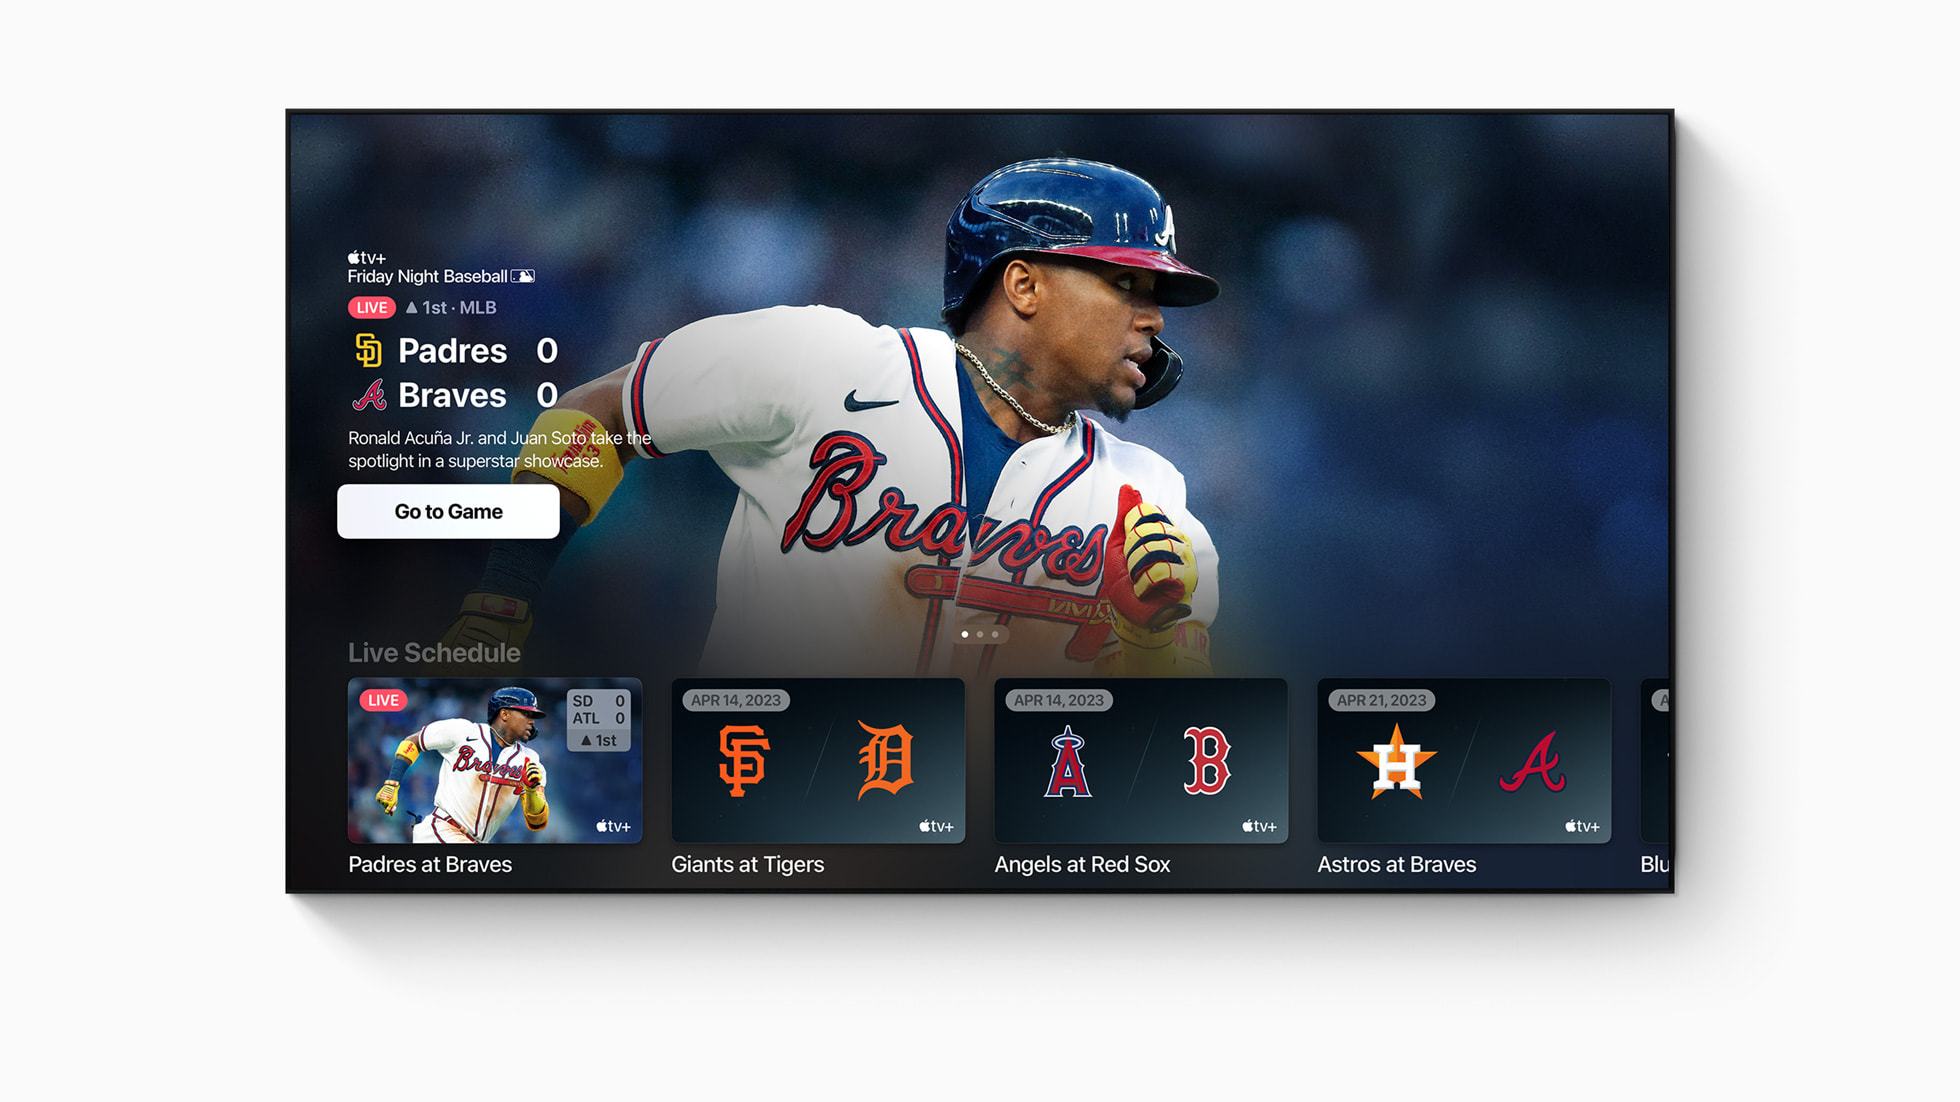 https://www.apple.com/newsroom/images/product/apple-tv-plus/standard/Apple-TV-plus-MLB-Friday-Night-Baseball-hero_big.jpg.large_2x.jpg